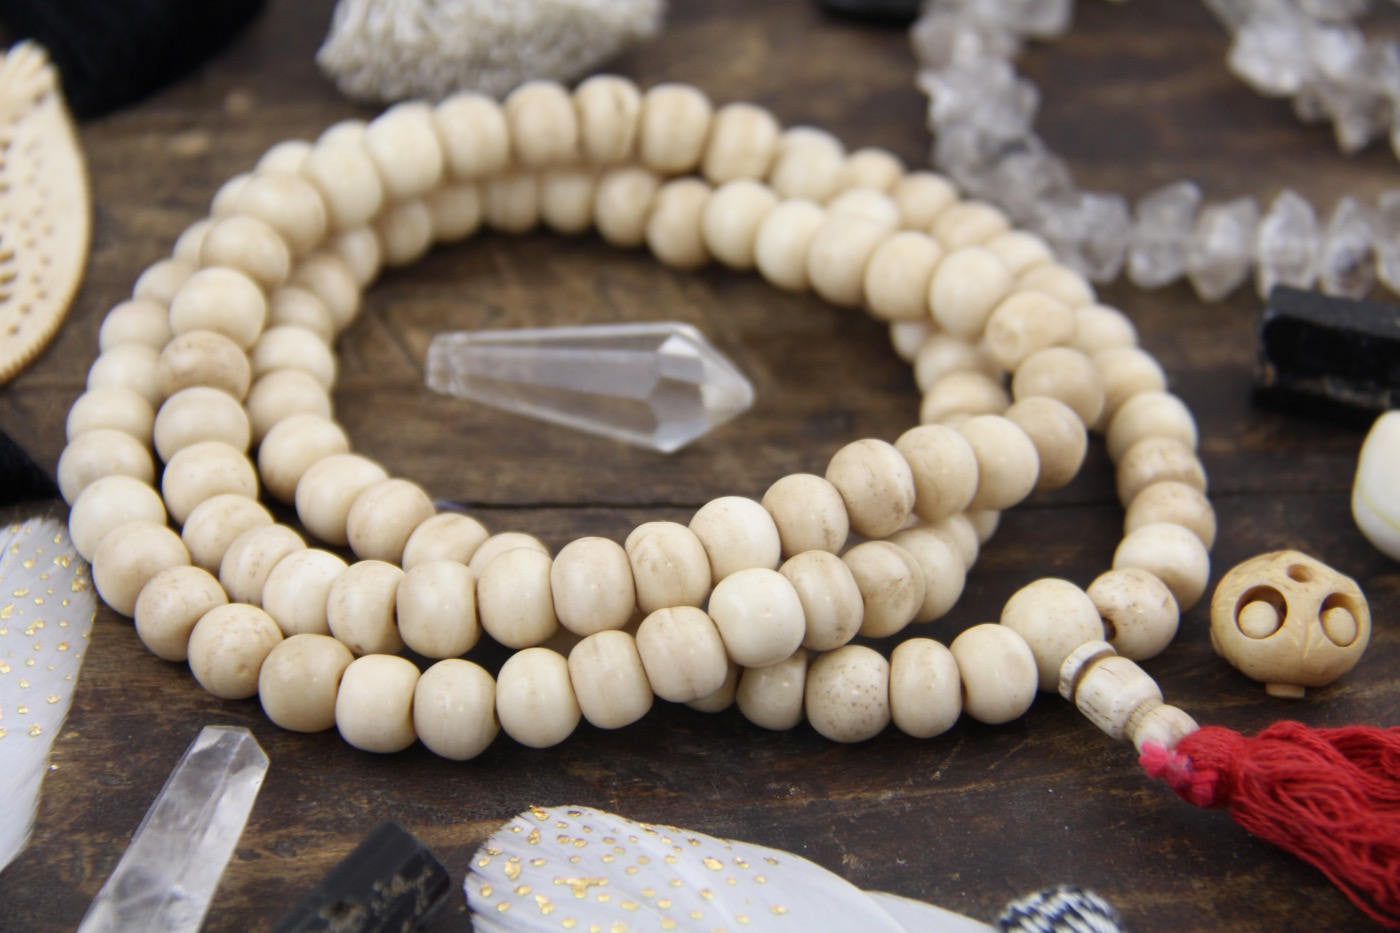 Cream Mala Rondelle Bone Beads : 10x8mm, 108 beads Yoga Mala - ShopWomanShopsWorld.com. Bone Beads, Tassels, Pom Poms, African Beads.